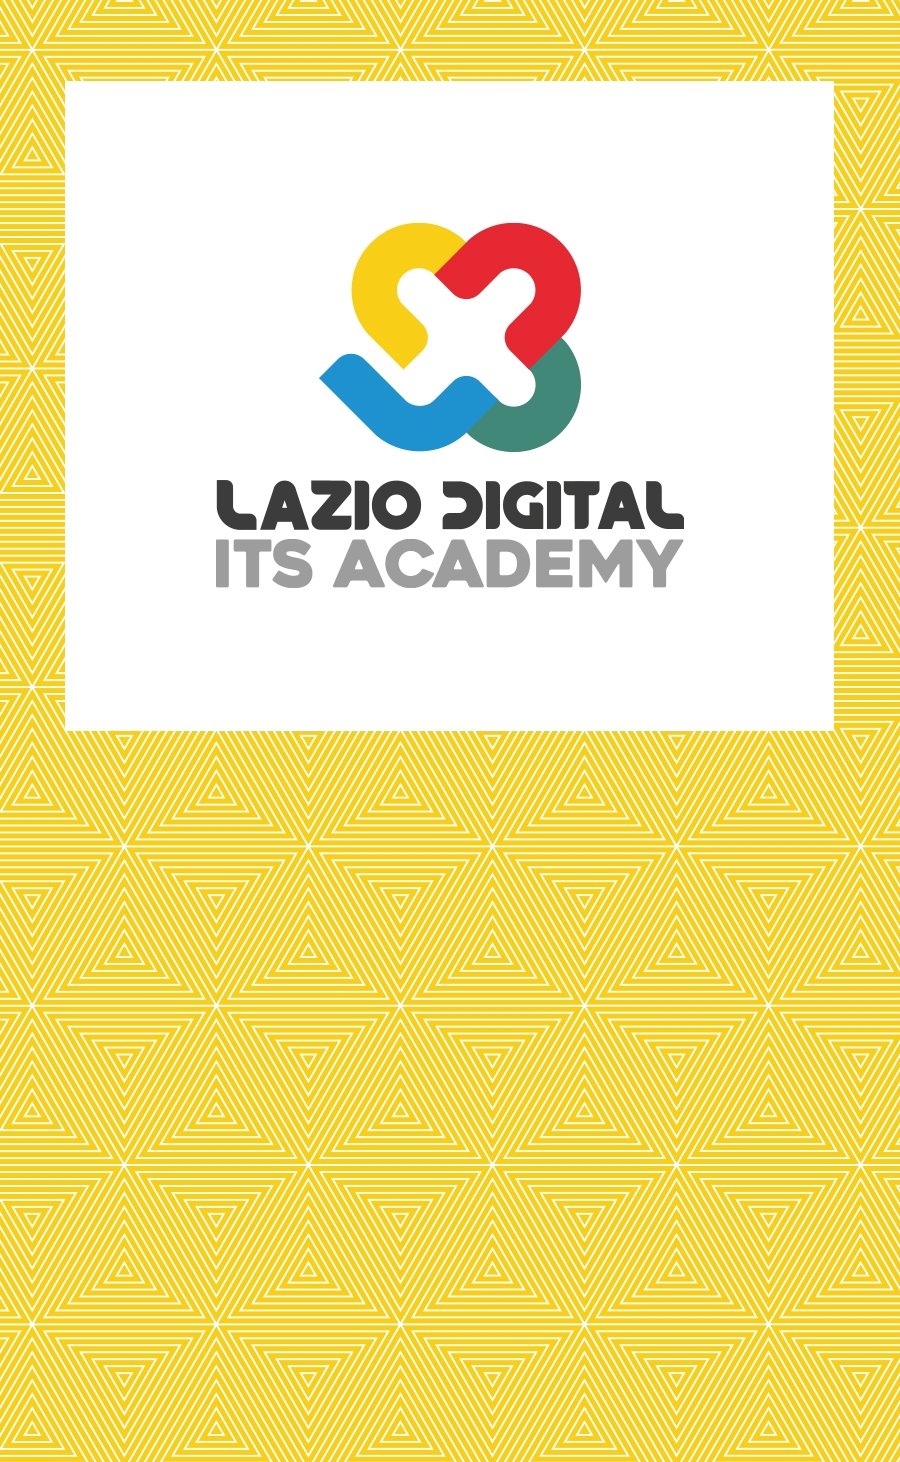 ITS Academy Lazio Digital